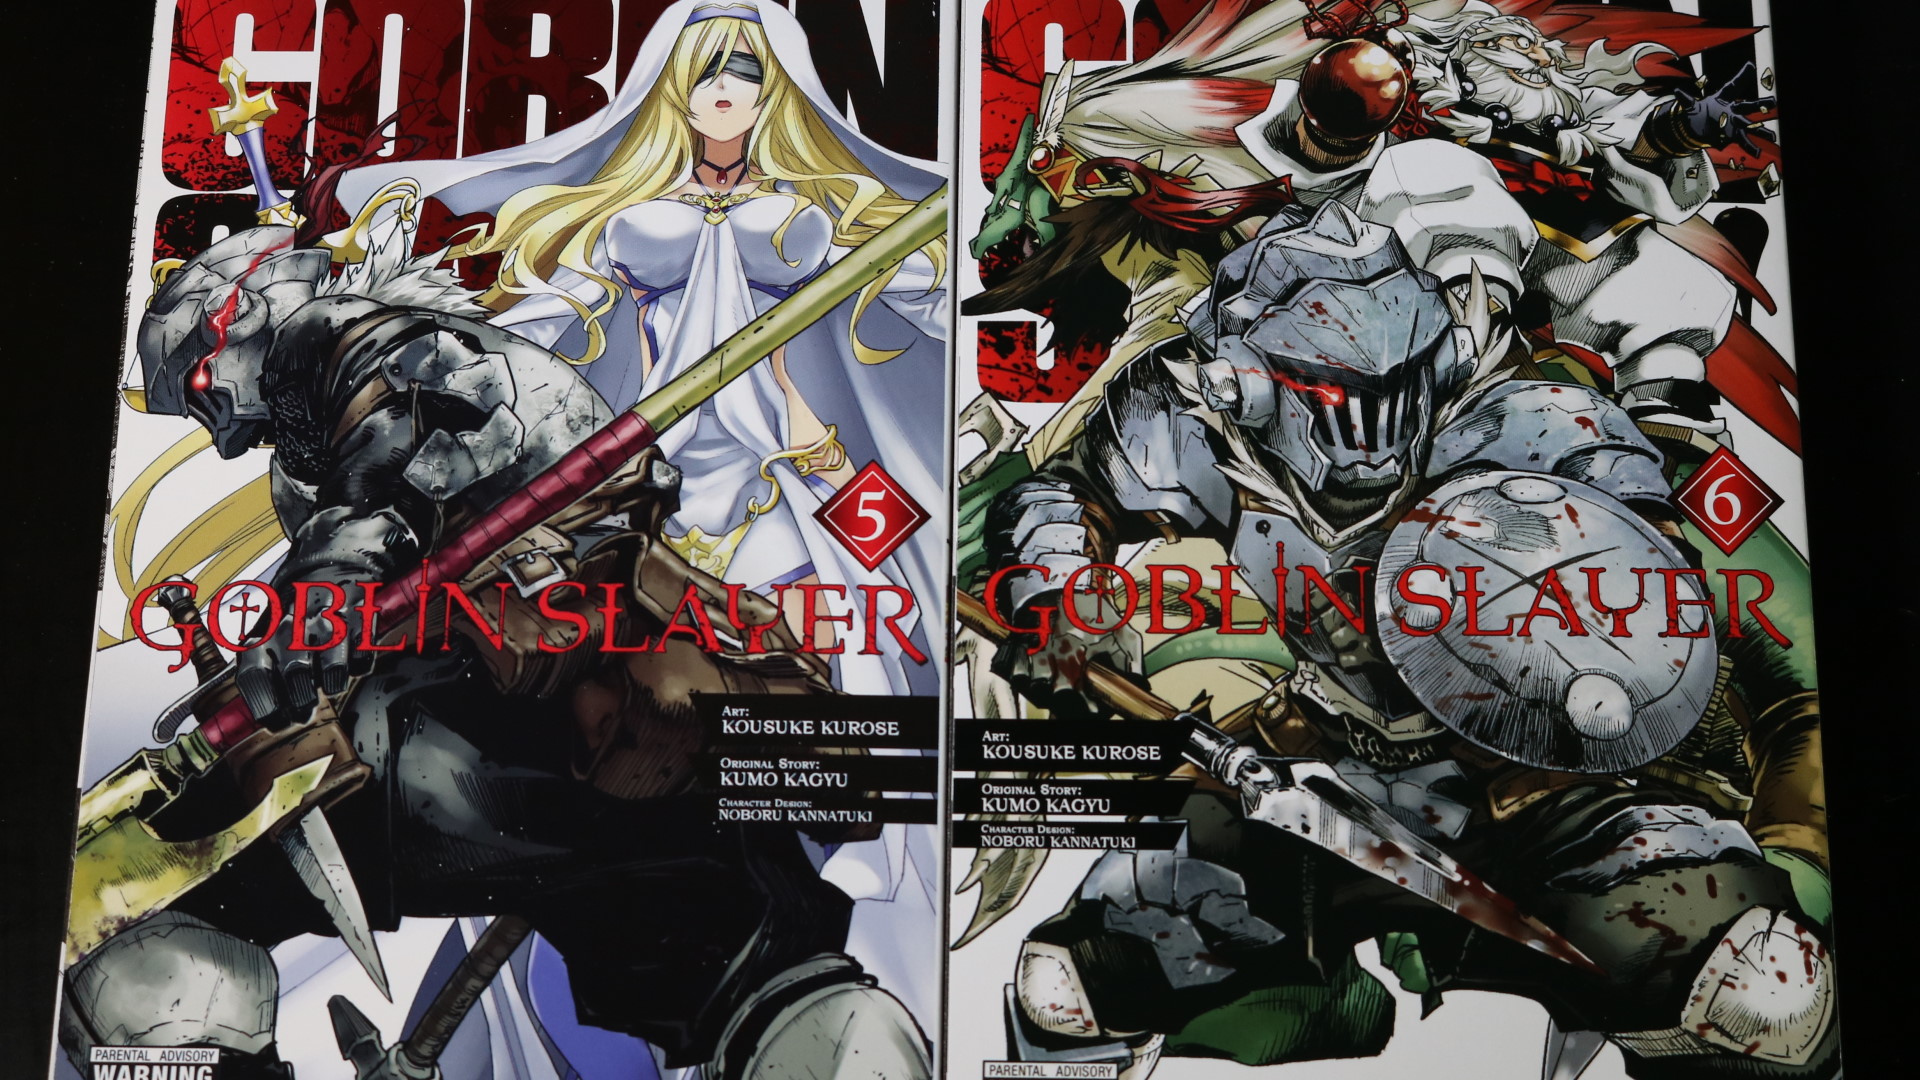 A new Goblin Slayer manga series adapting LN 12 titled Goblin